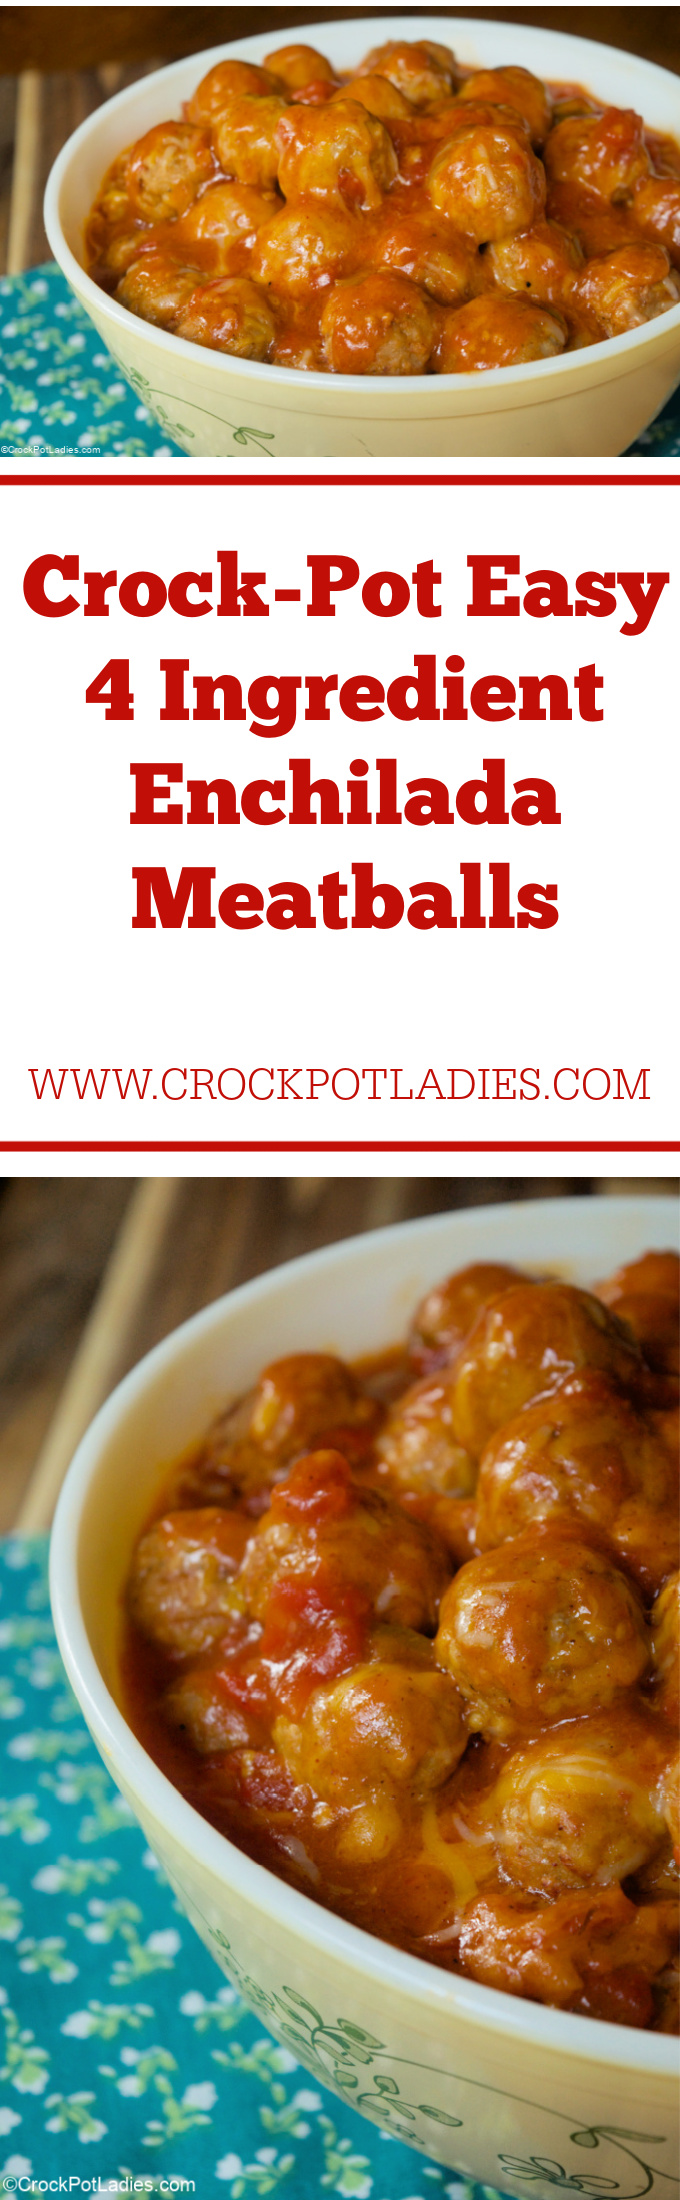 Crock-Pot Easy 4 Ingredient Enchilada Meatballs